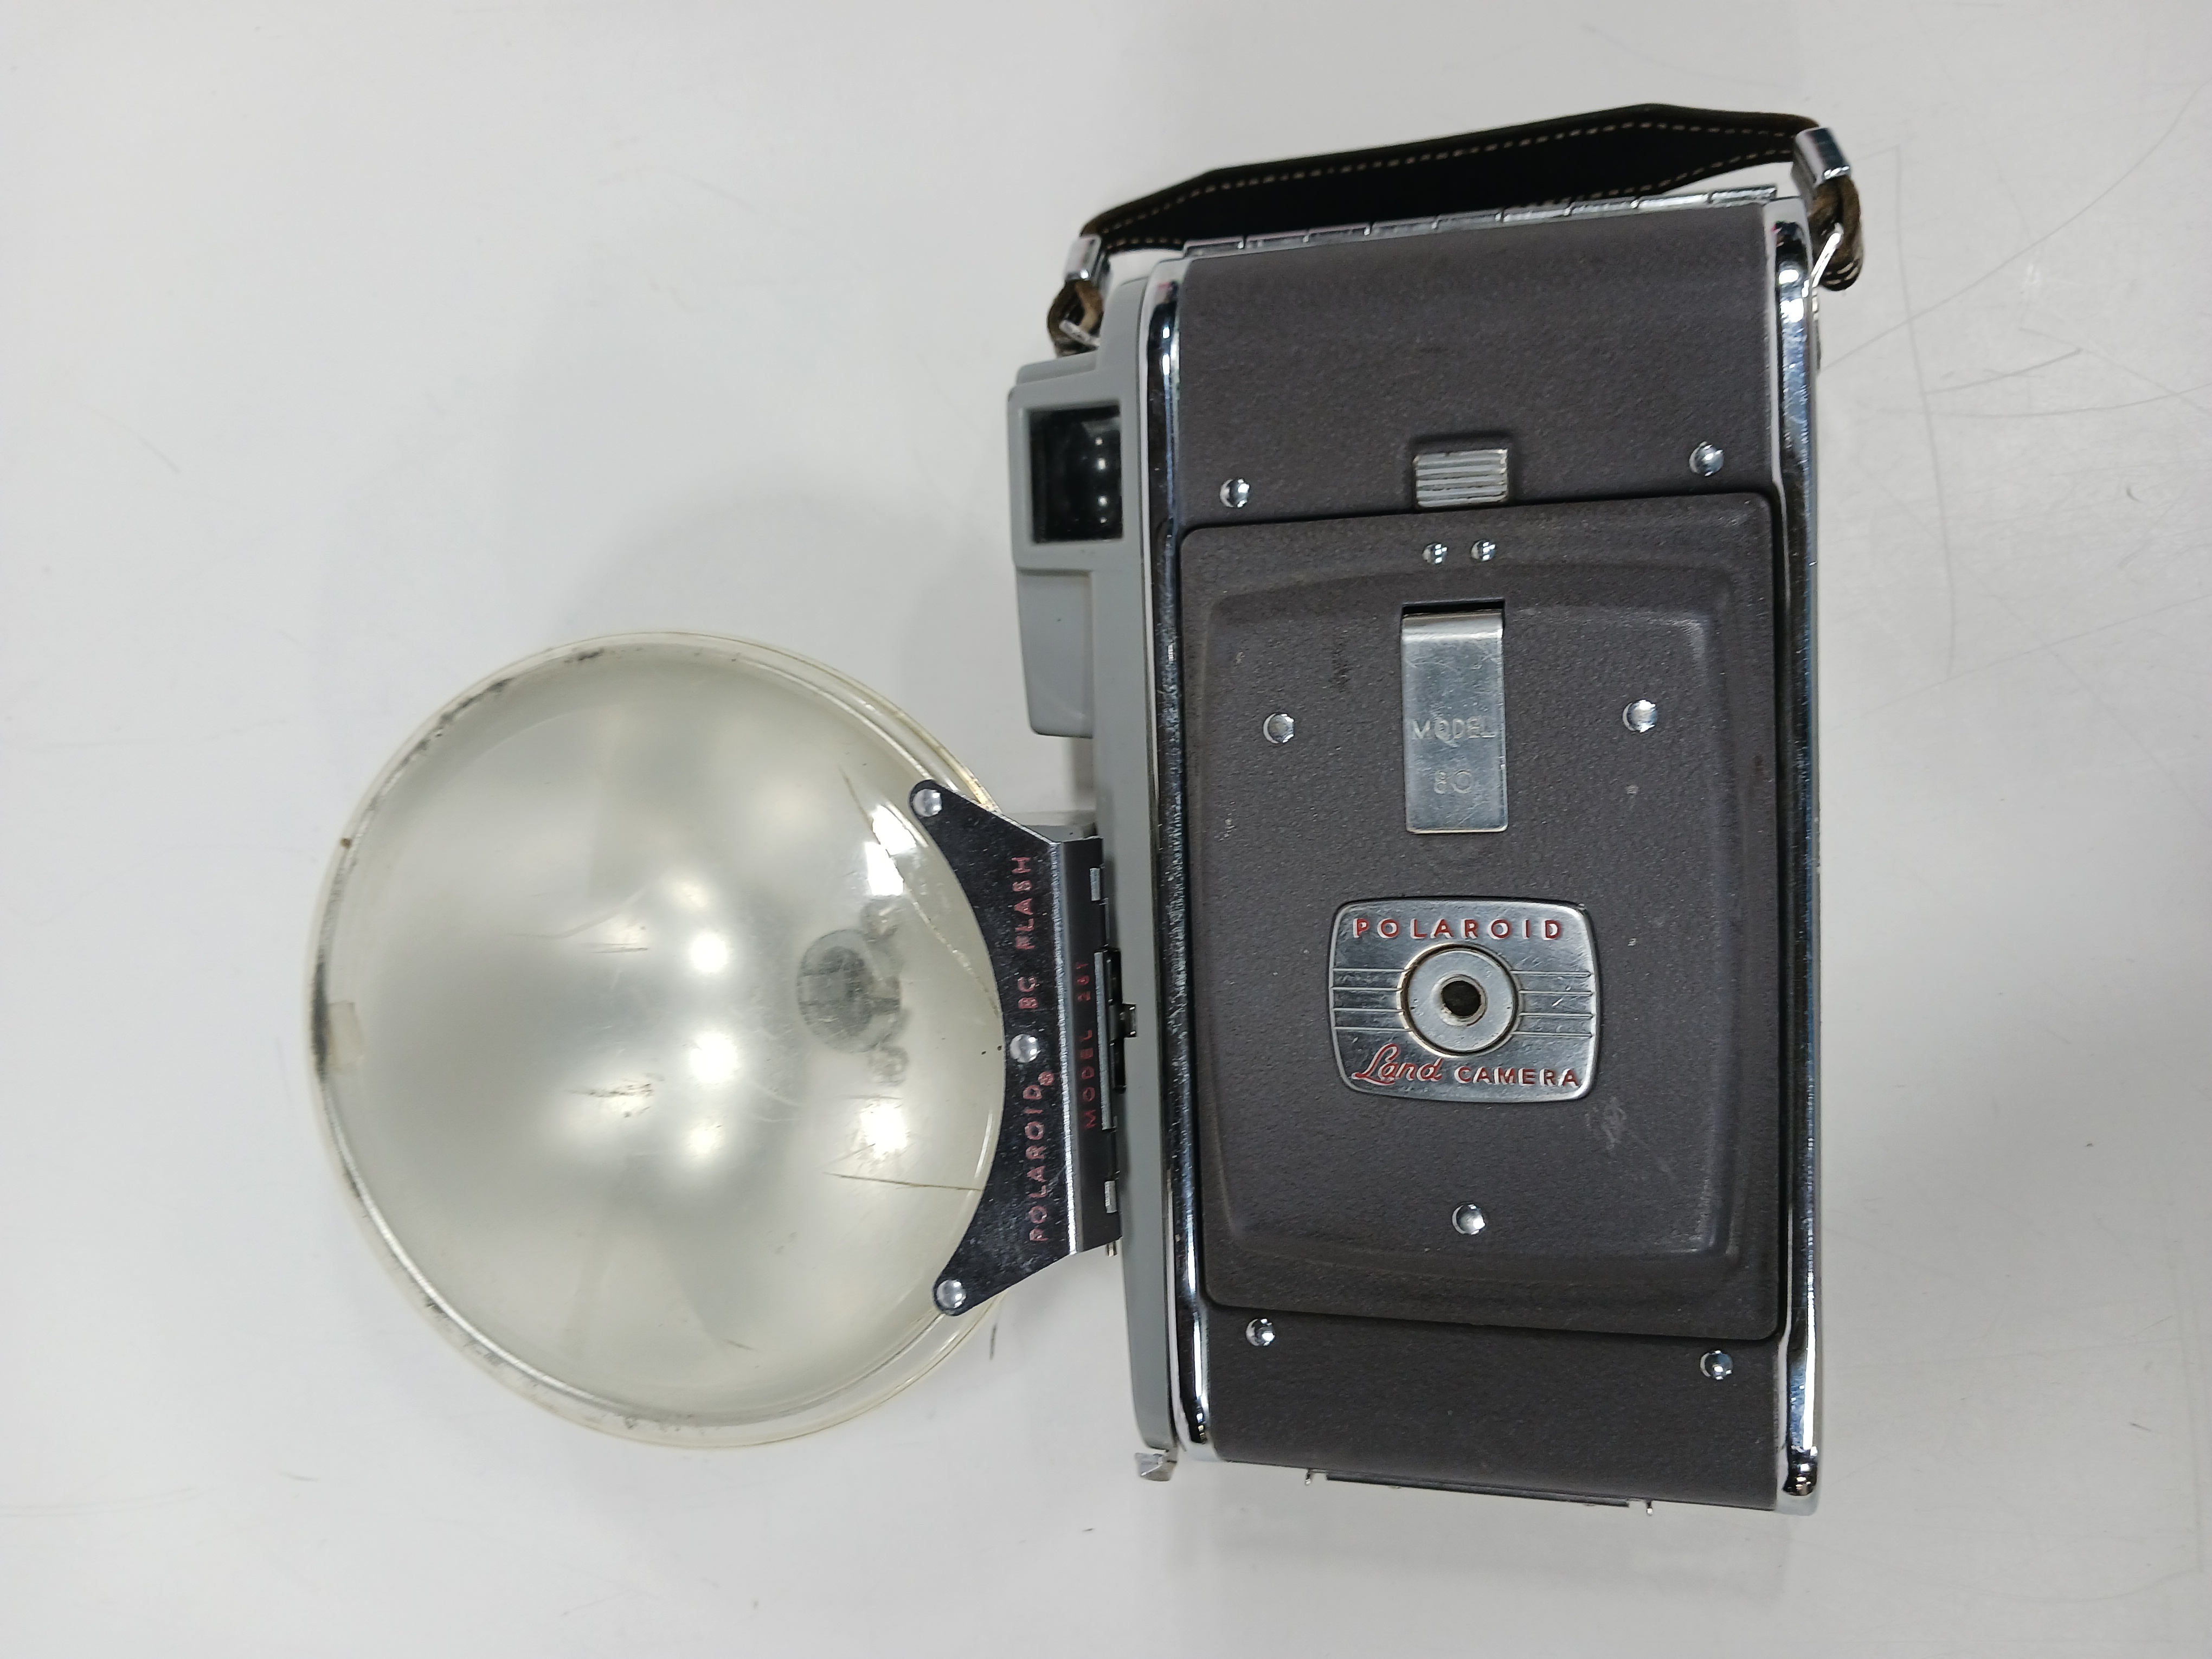 polaroid land camera model 150